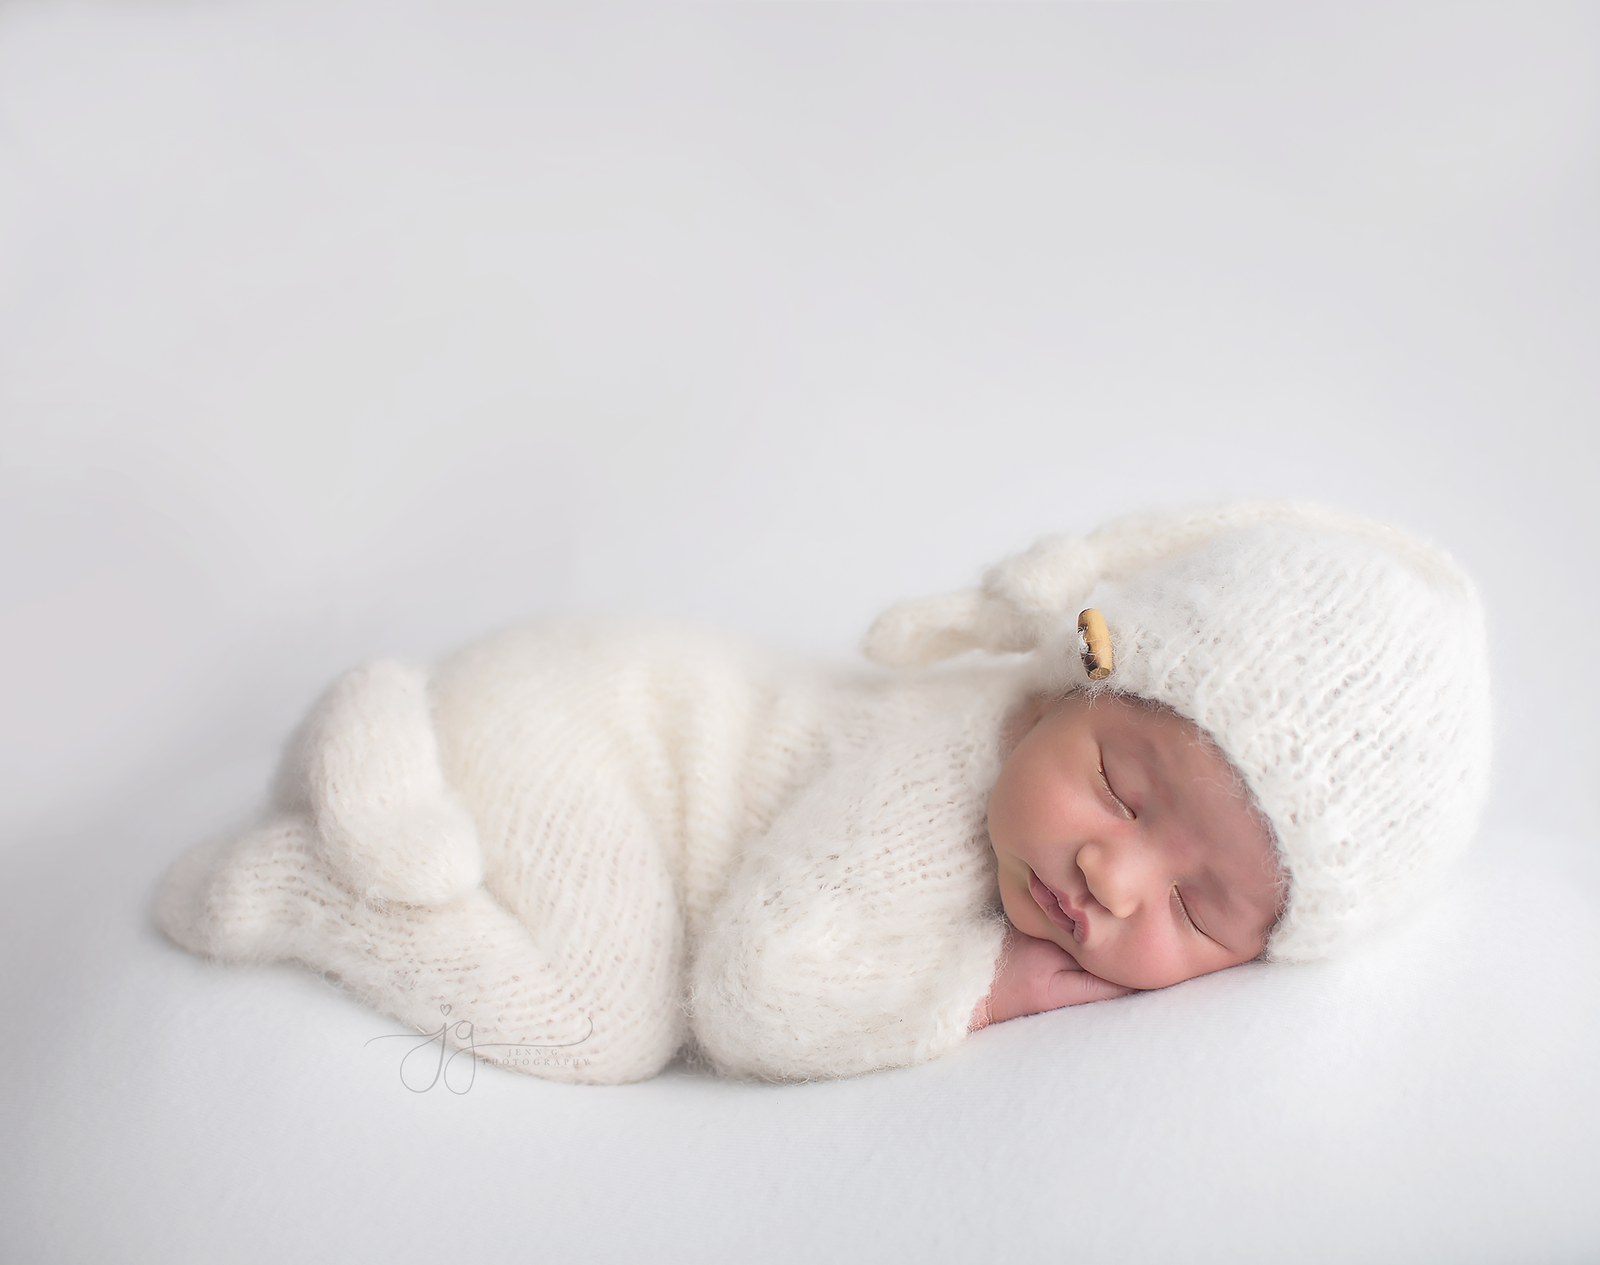 Simple newborn image on white